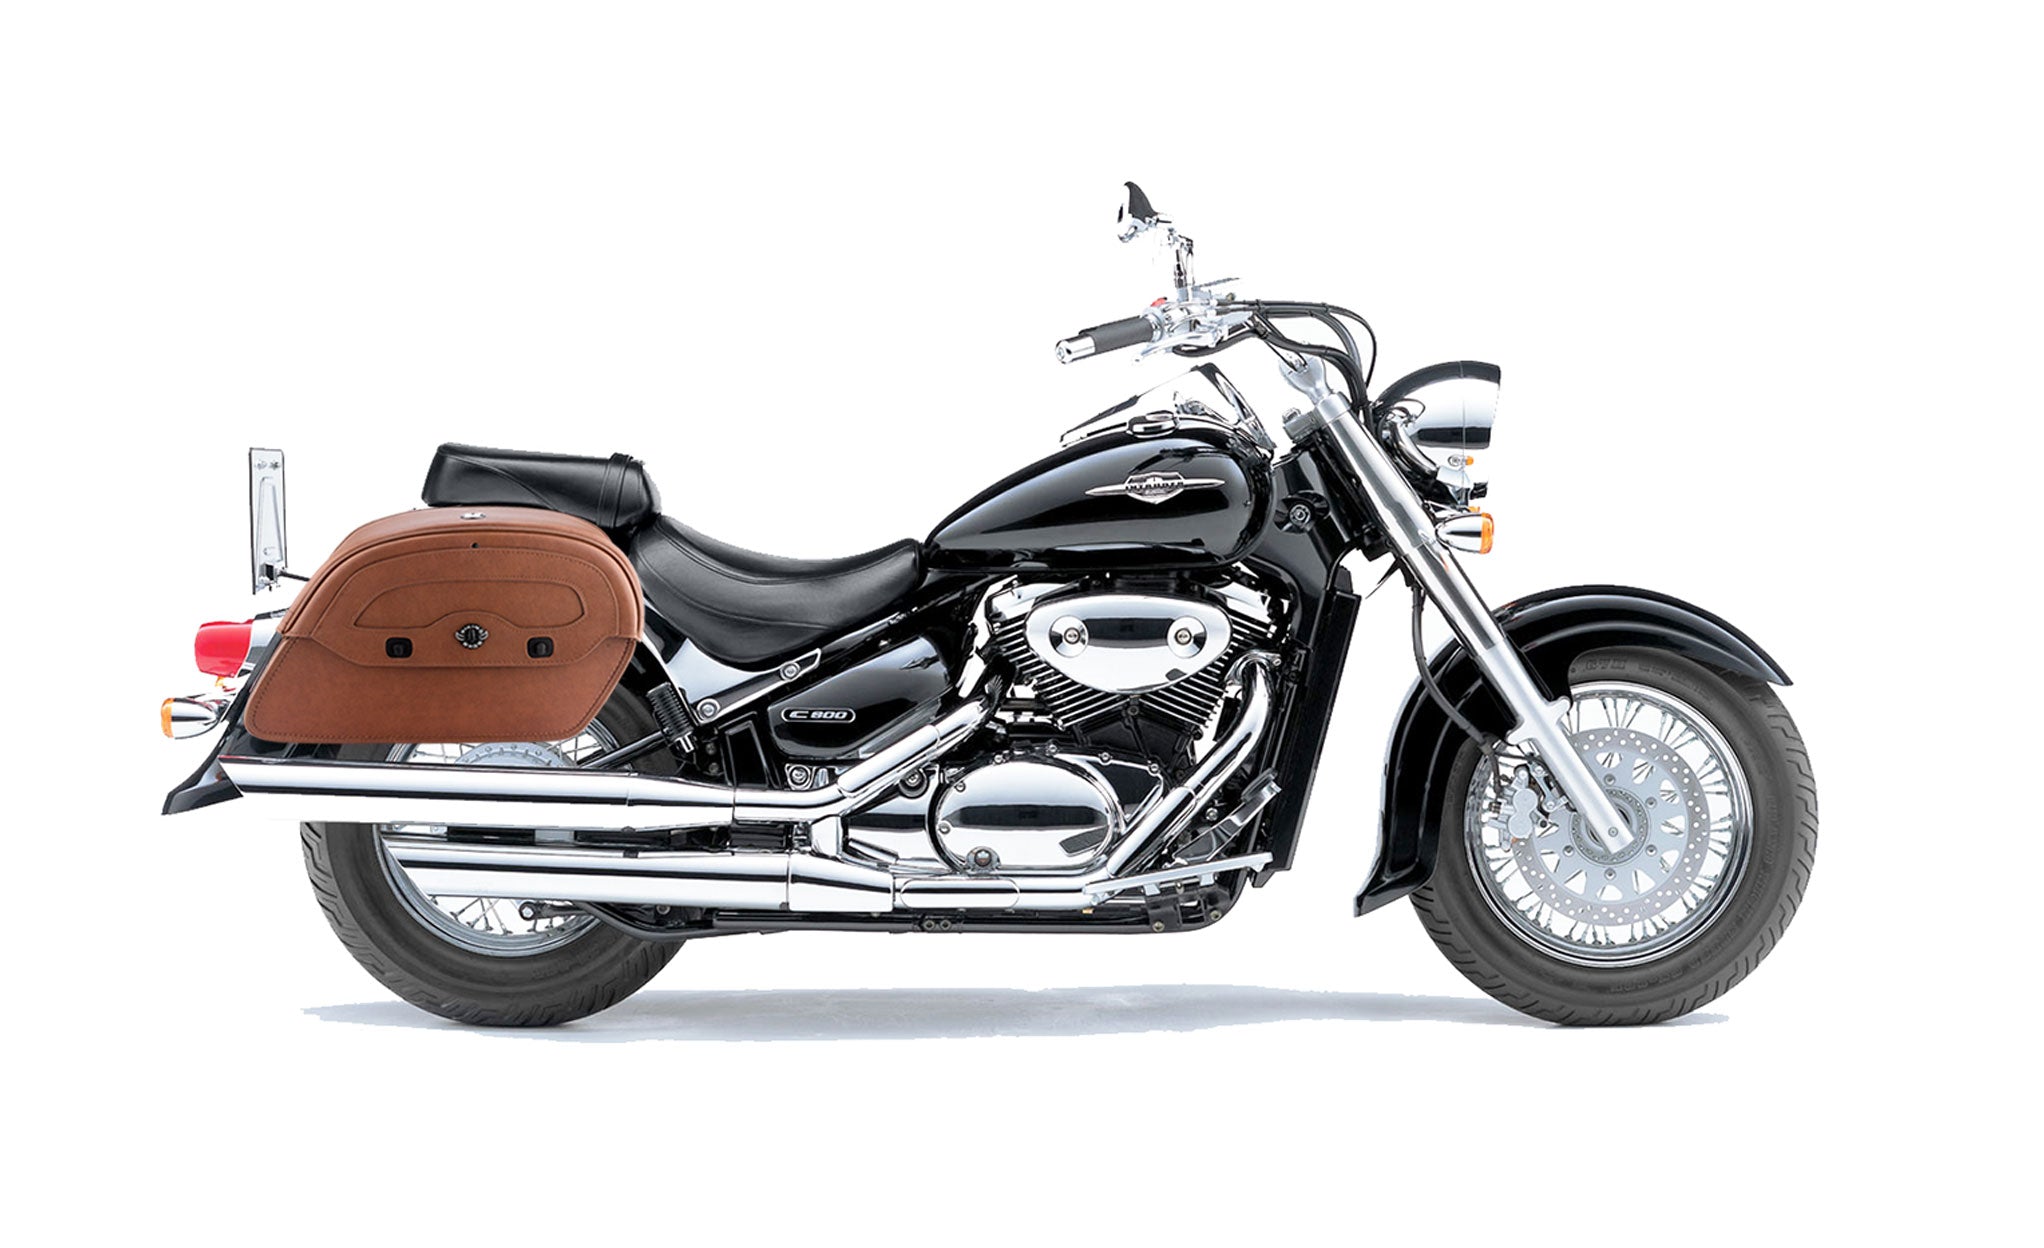 Viking Warrior Brown Large Suzuki Volusia 800 Leather Motorcycle Saddlebags on Bike Photo @expand